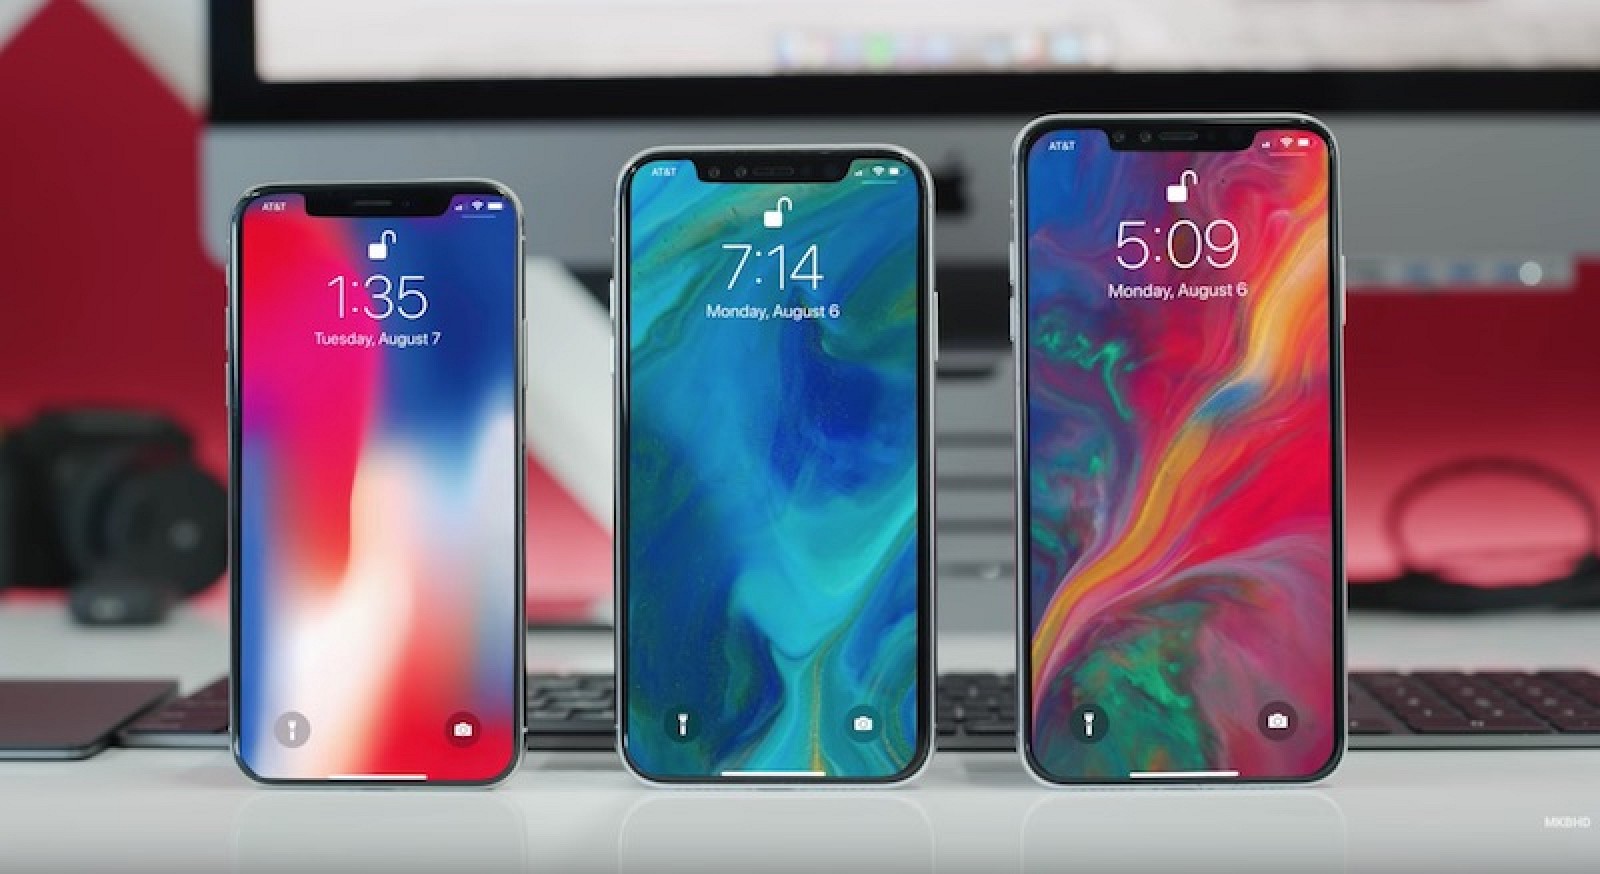 2018 iPhones